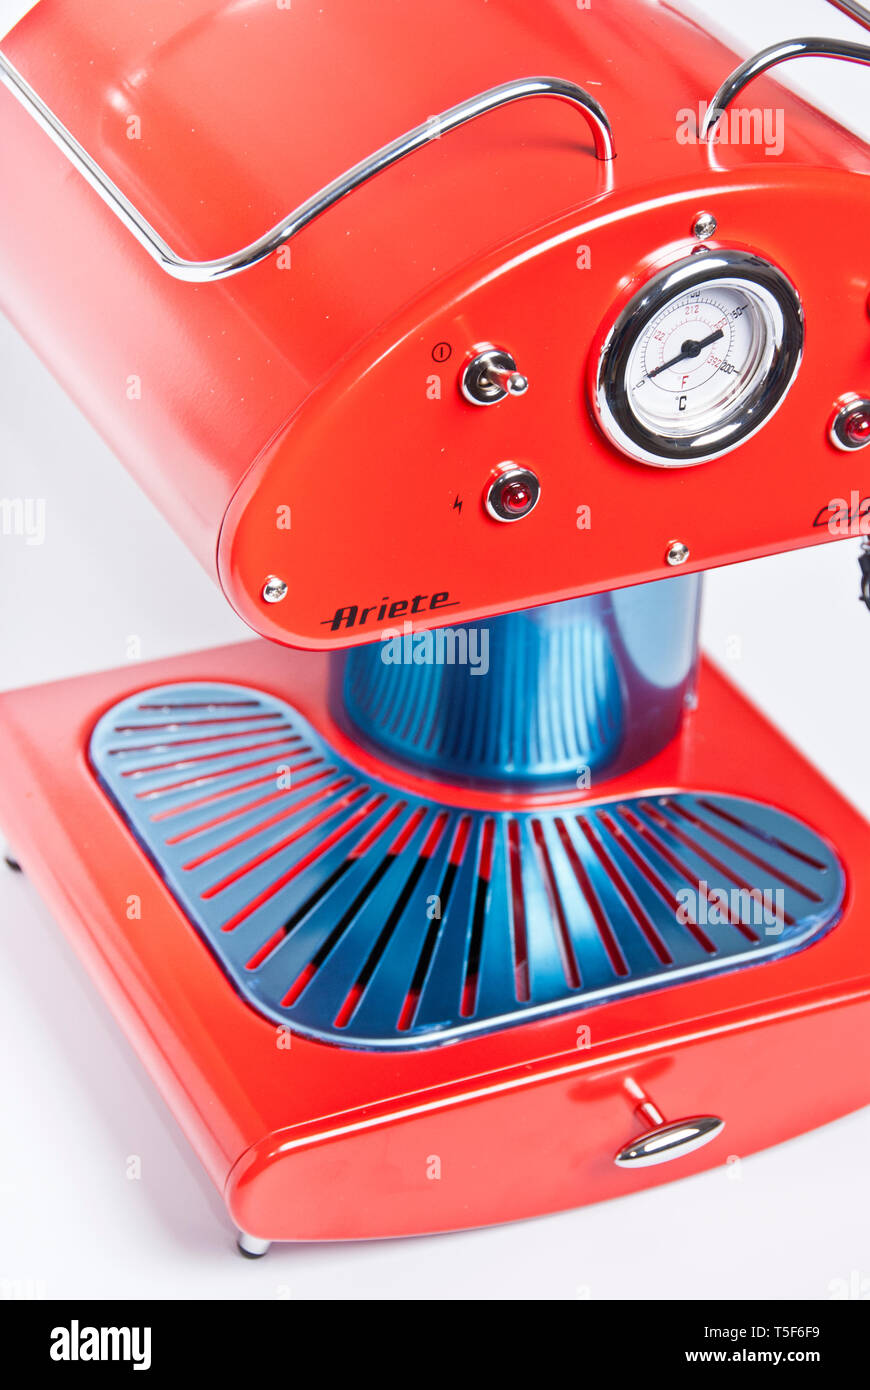 Rot retro style Kaffeemaschine Maschine Stockfotografie - Alamy